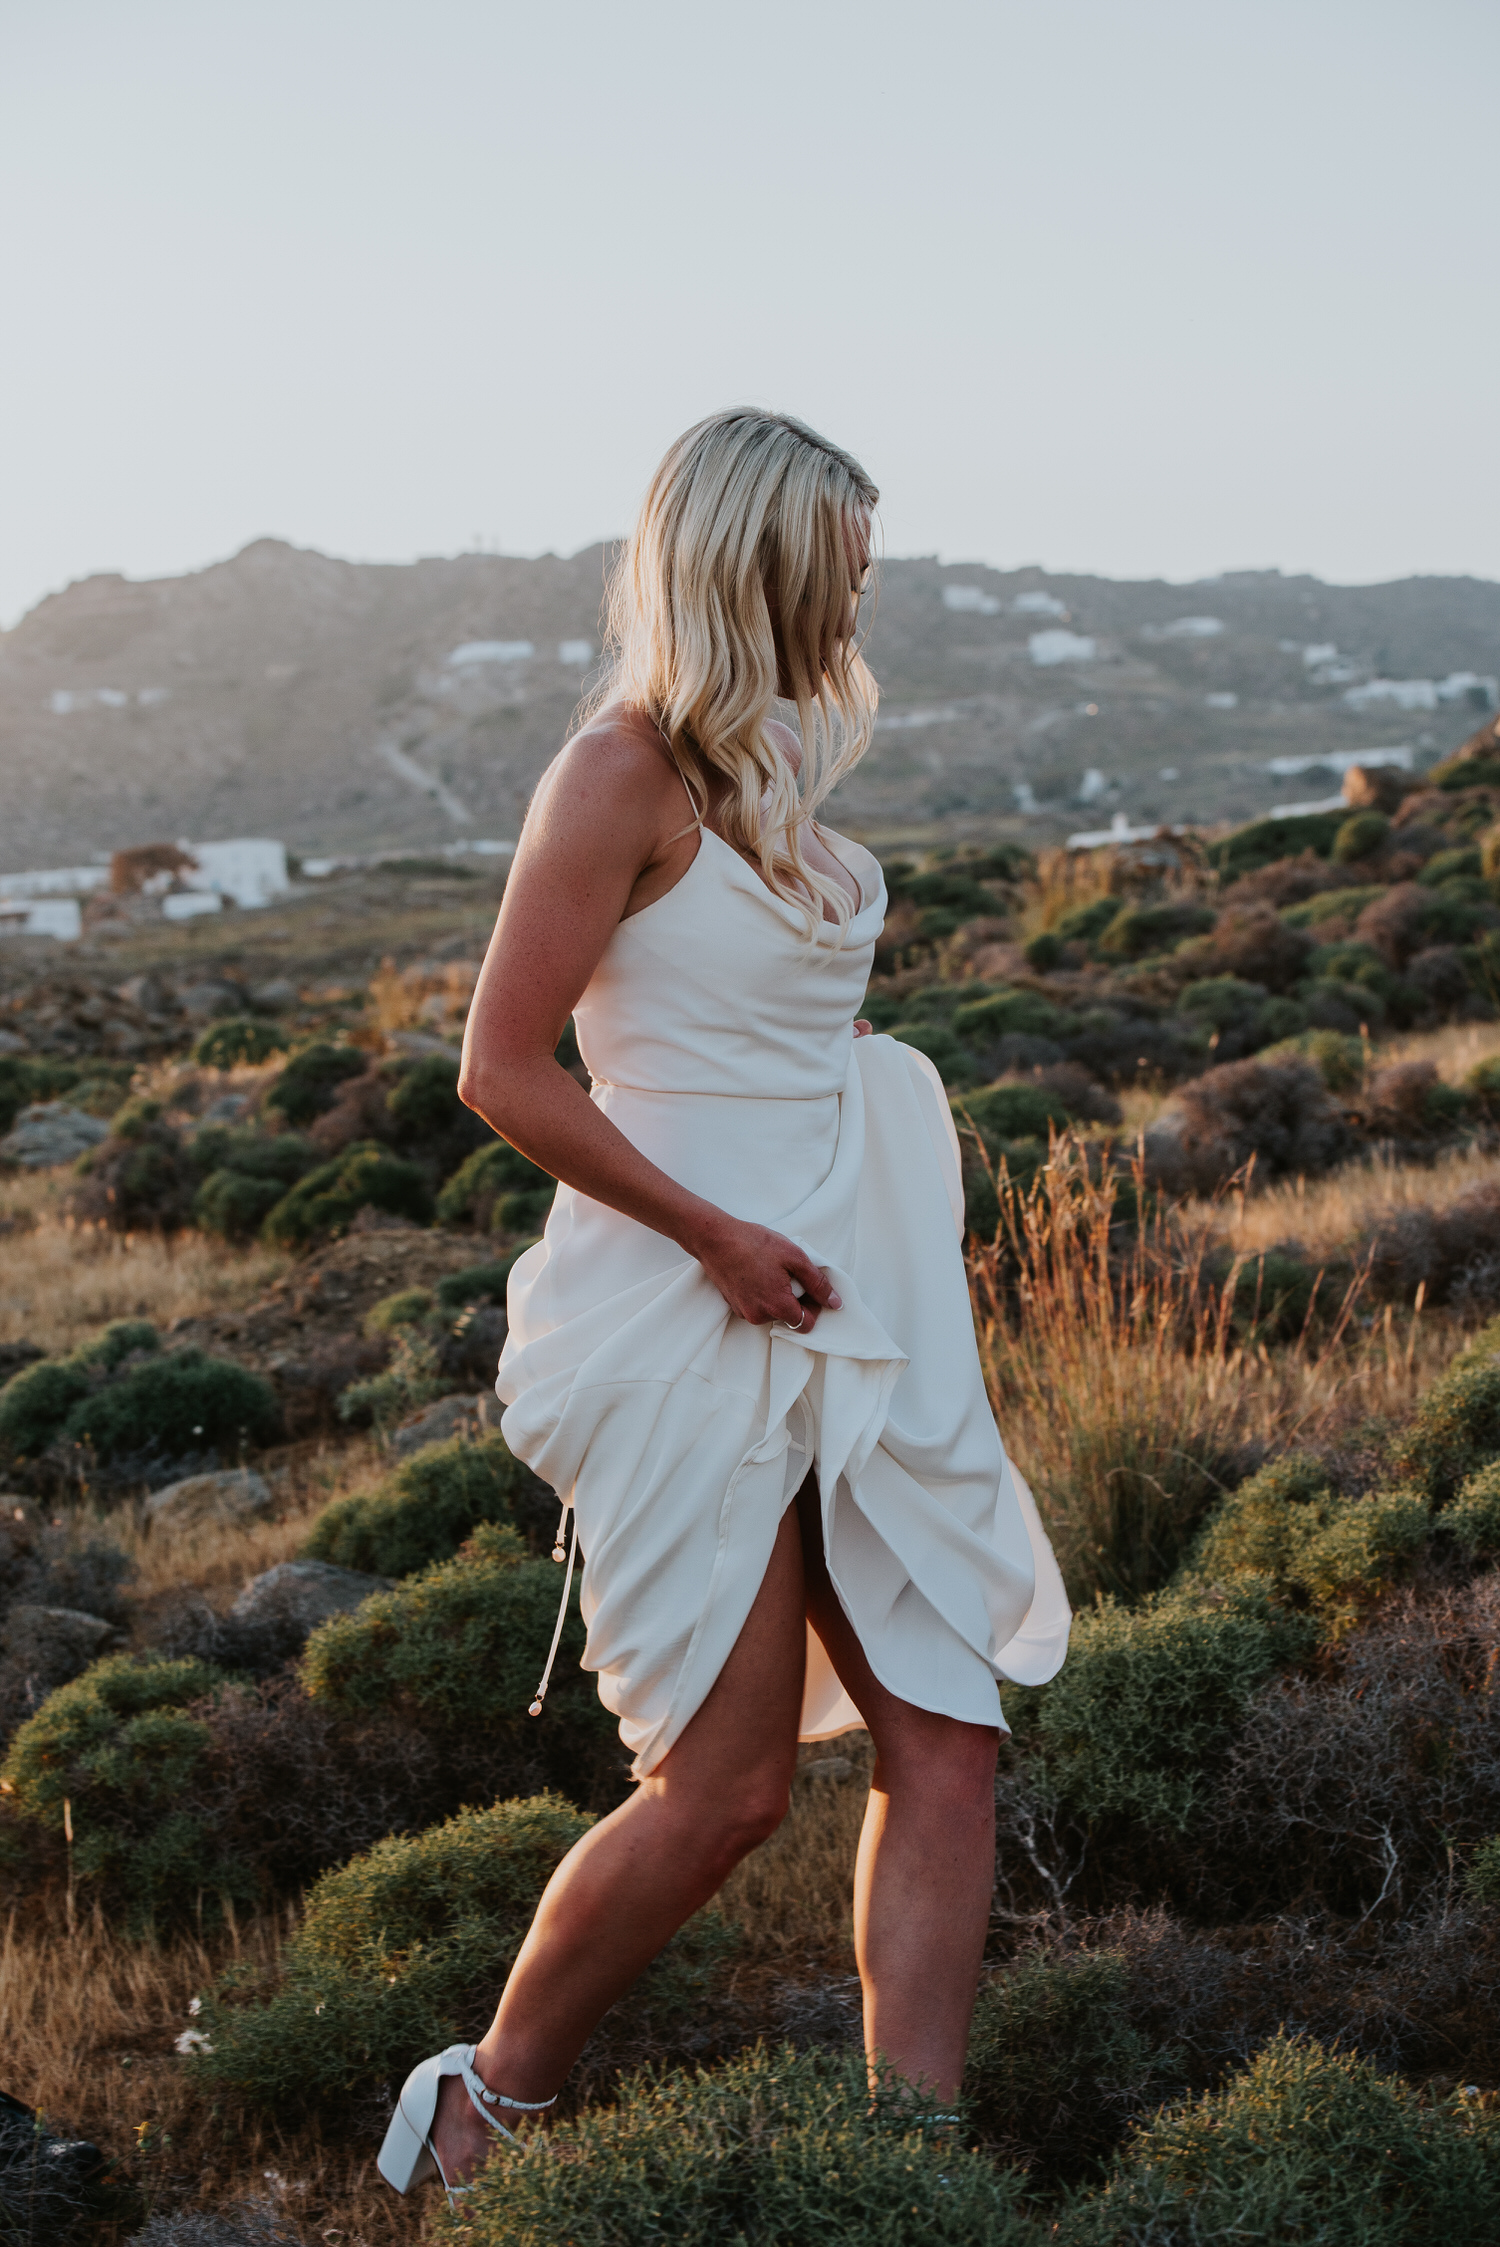 Mykonos wedding photographer: bride walking in sunset light with her dress up in her hands walking through grassy field.